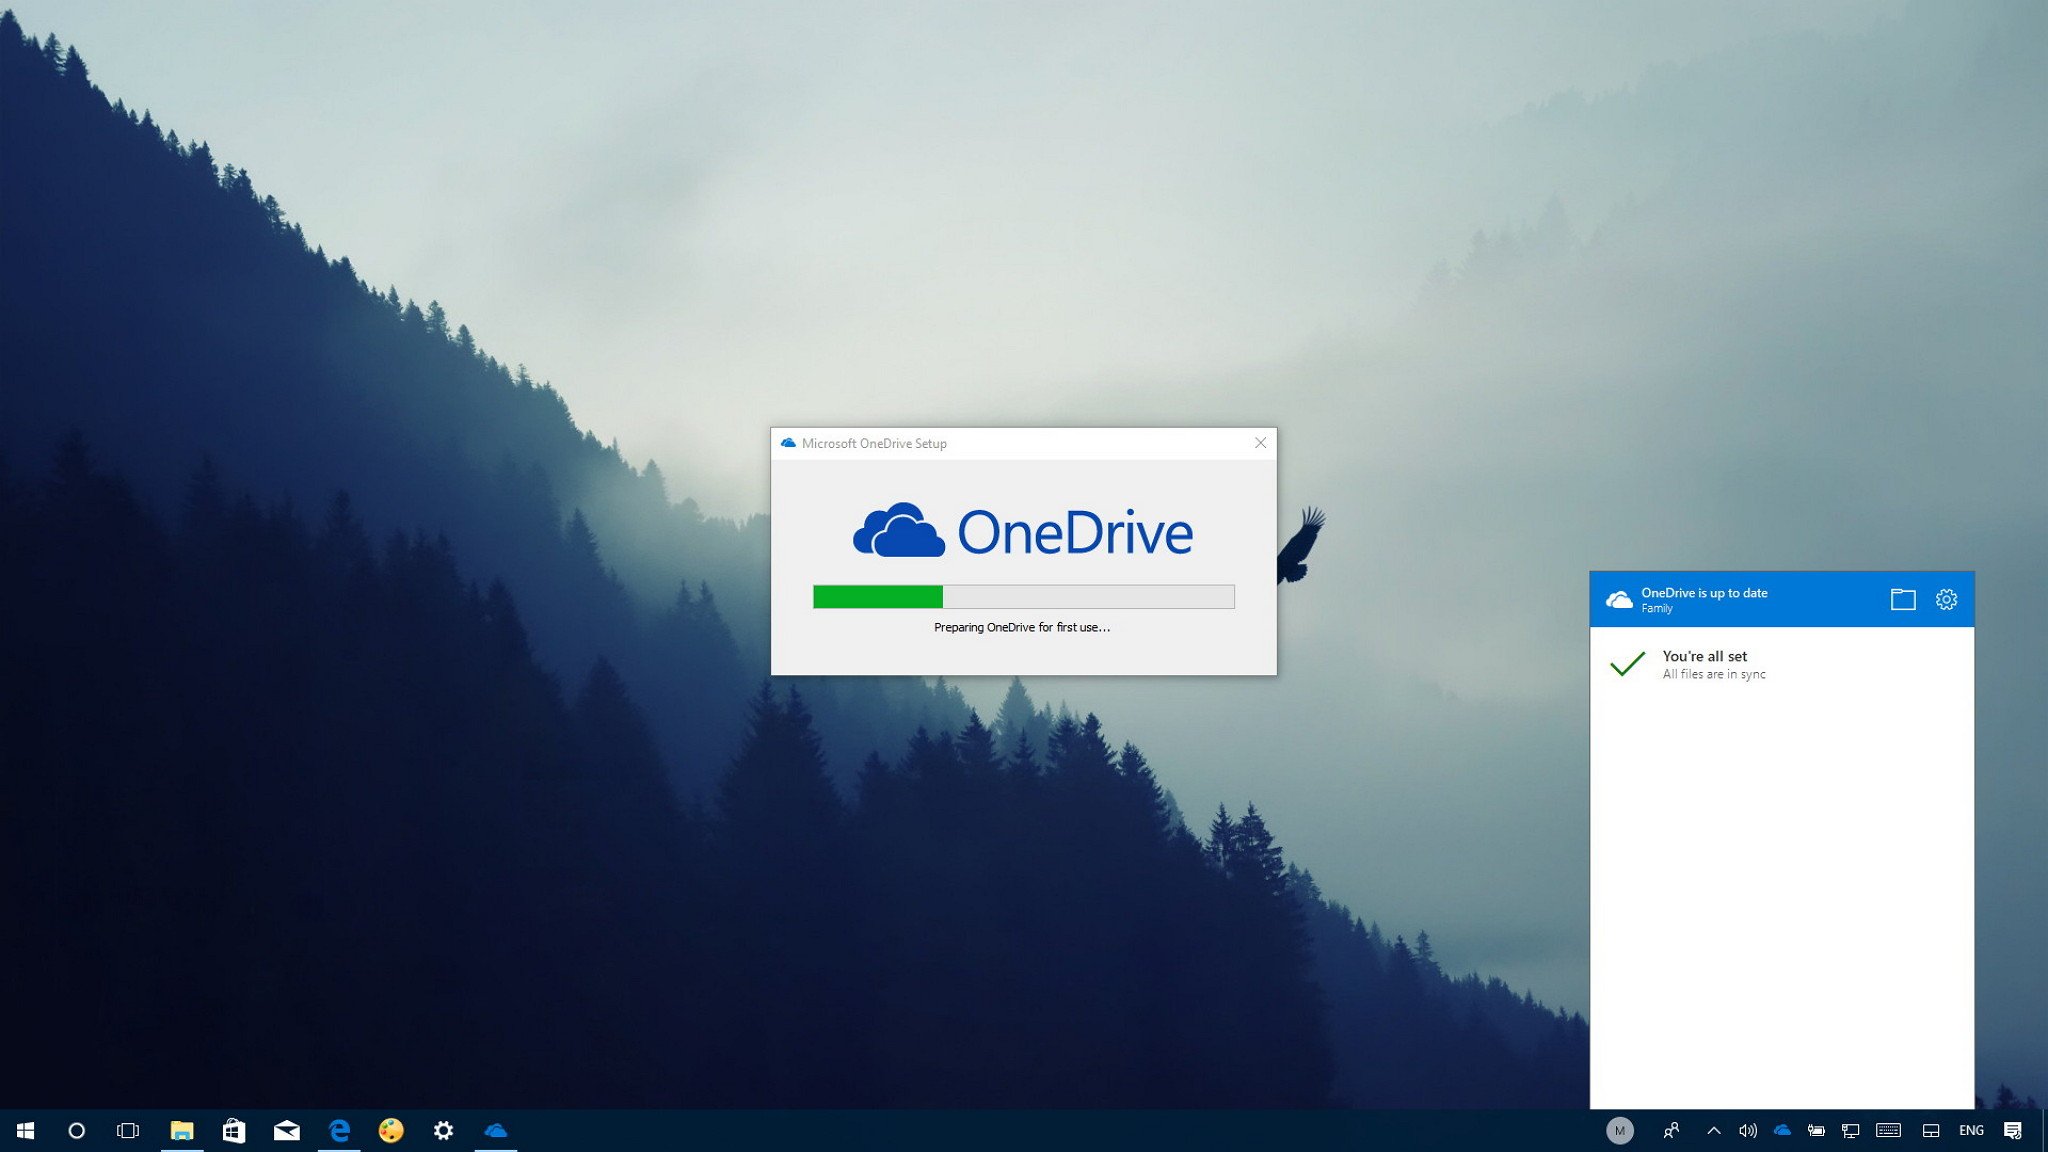 onedrive-files-ondemand-windows-10-fcu.jpg